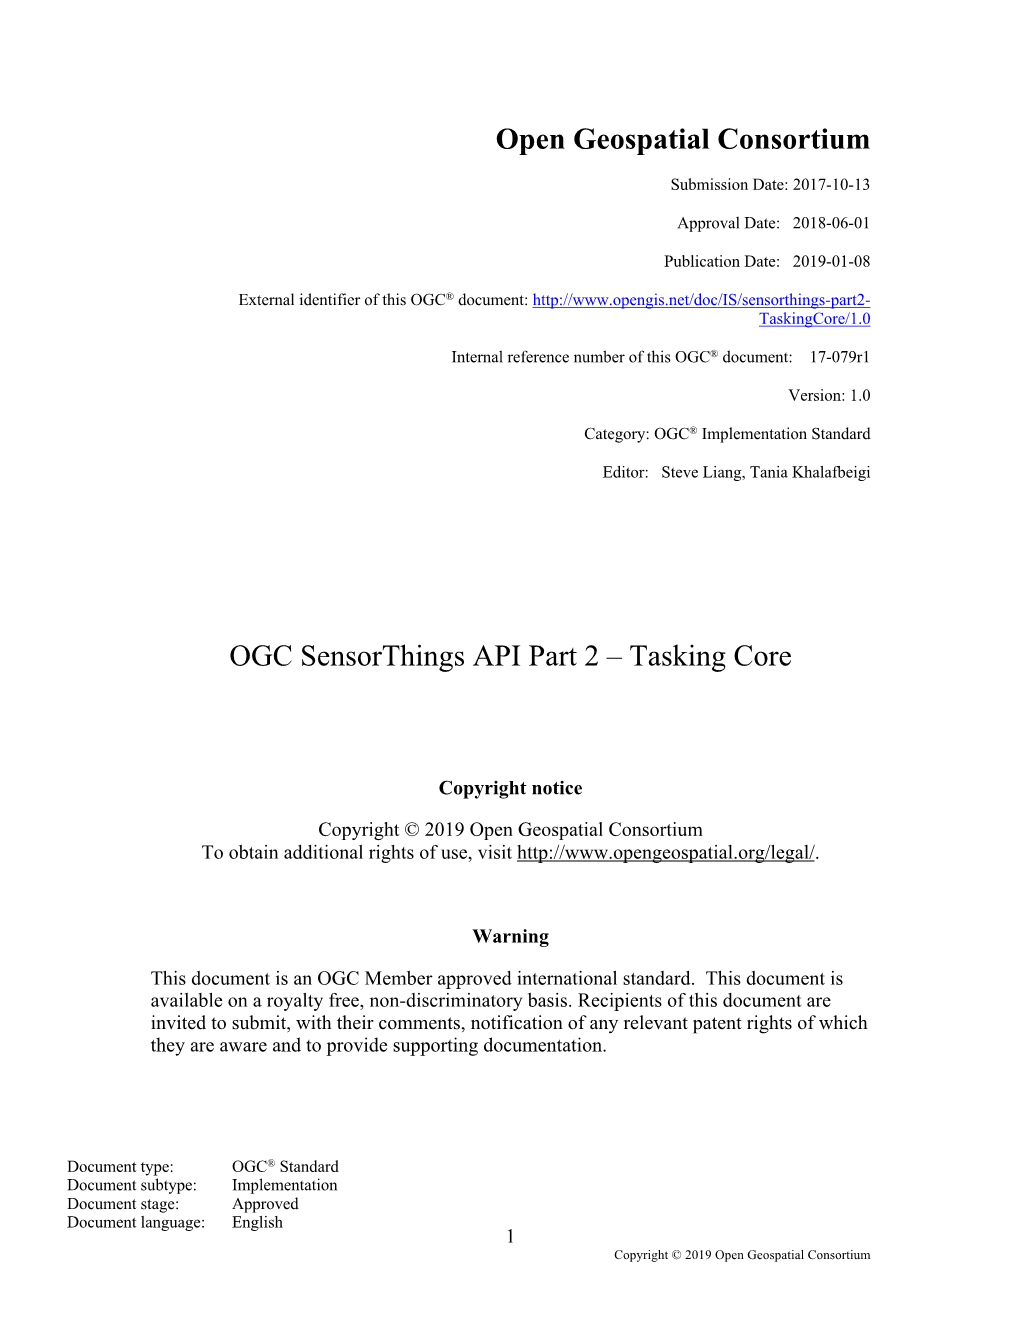 Open Geospatial Consortium OGC Sensorthings API Part 2 – Tasking